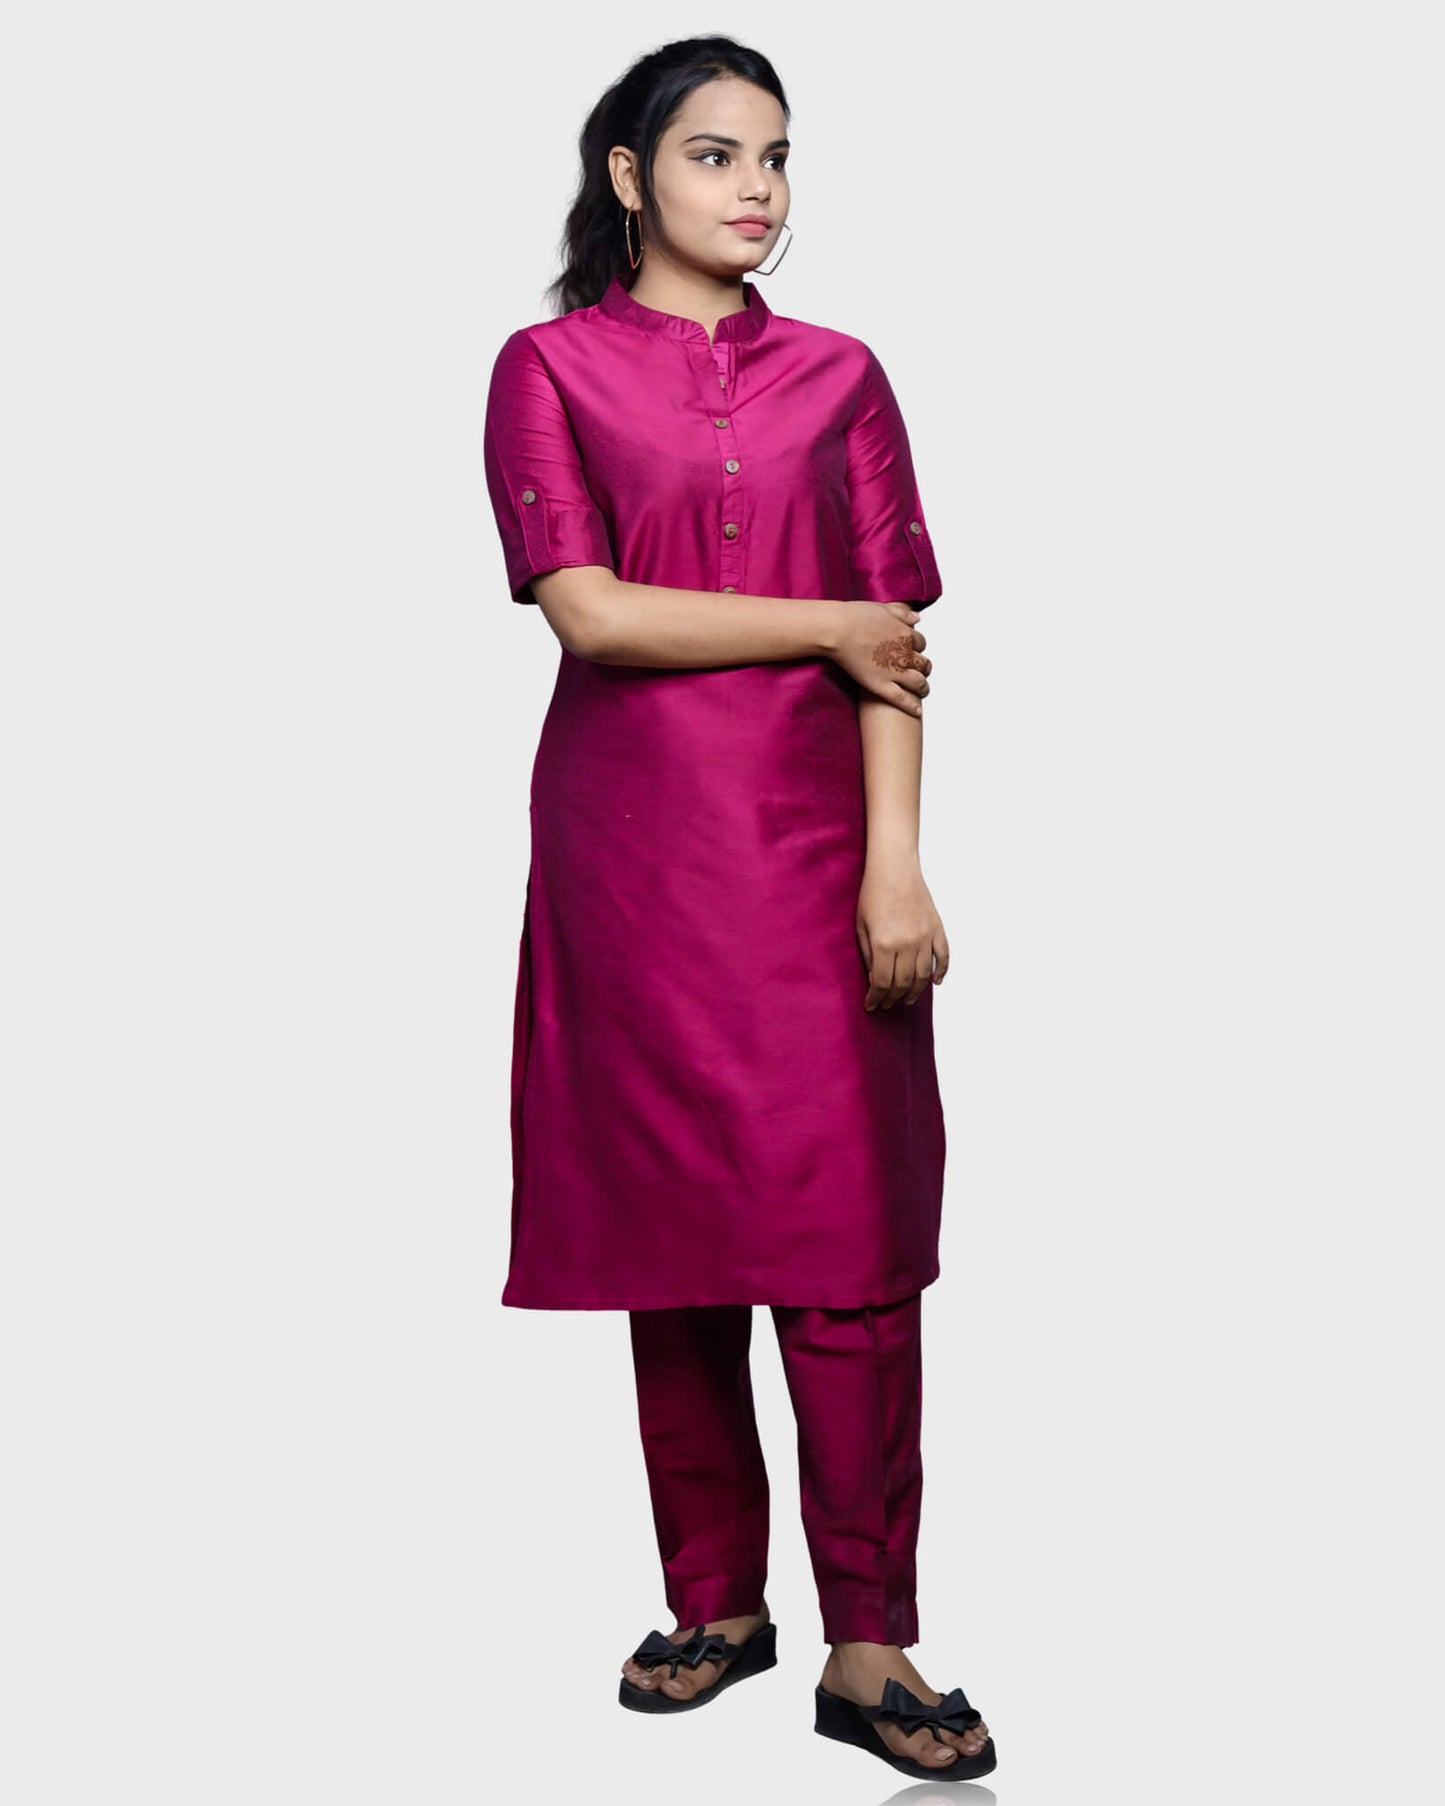 Silkfab Women's Banarasi Silk Fuchsia Solid Kurti Pant Set - SILKFAB